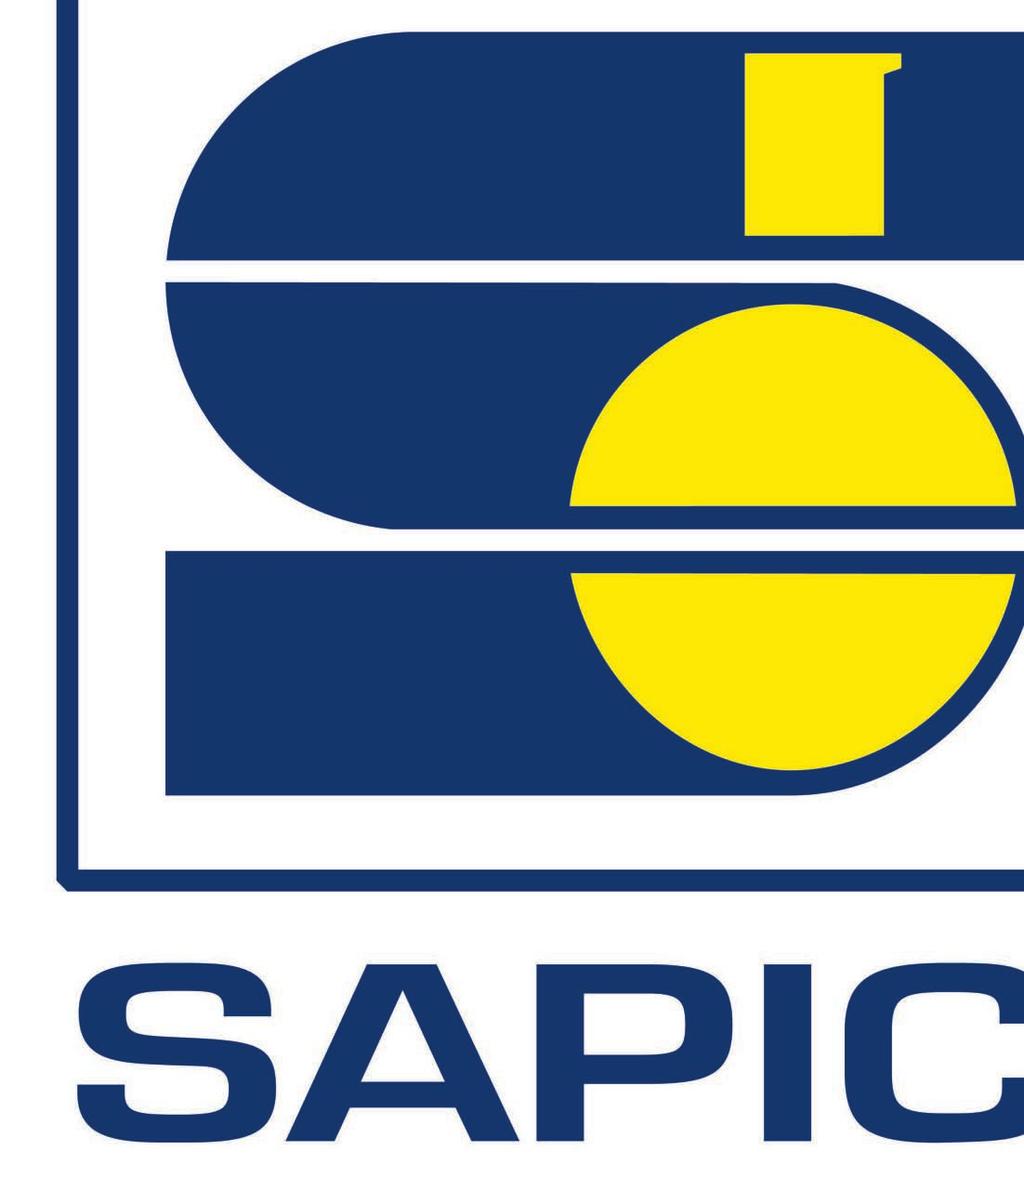 SAPICI S.p.A. web www.sapici.it e-mail info@sapici.it Technical Information e-mail tech@sapici.it phone +39 02 921871 fax +39 02 9214 1949 Commercial Information e-mail sales@sapici.